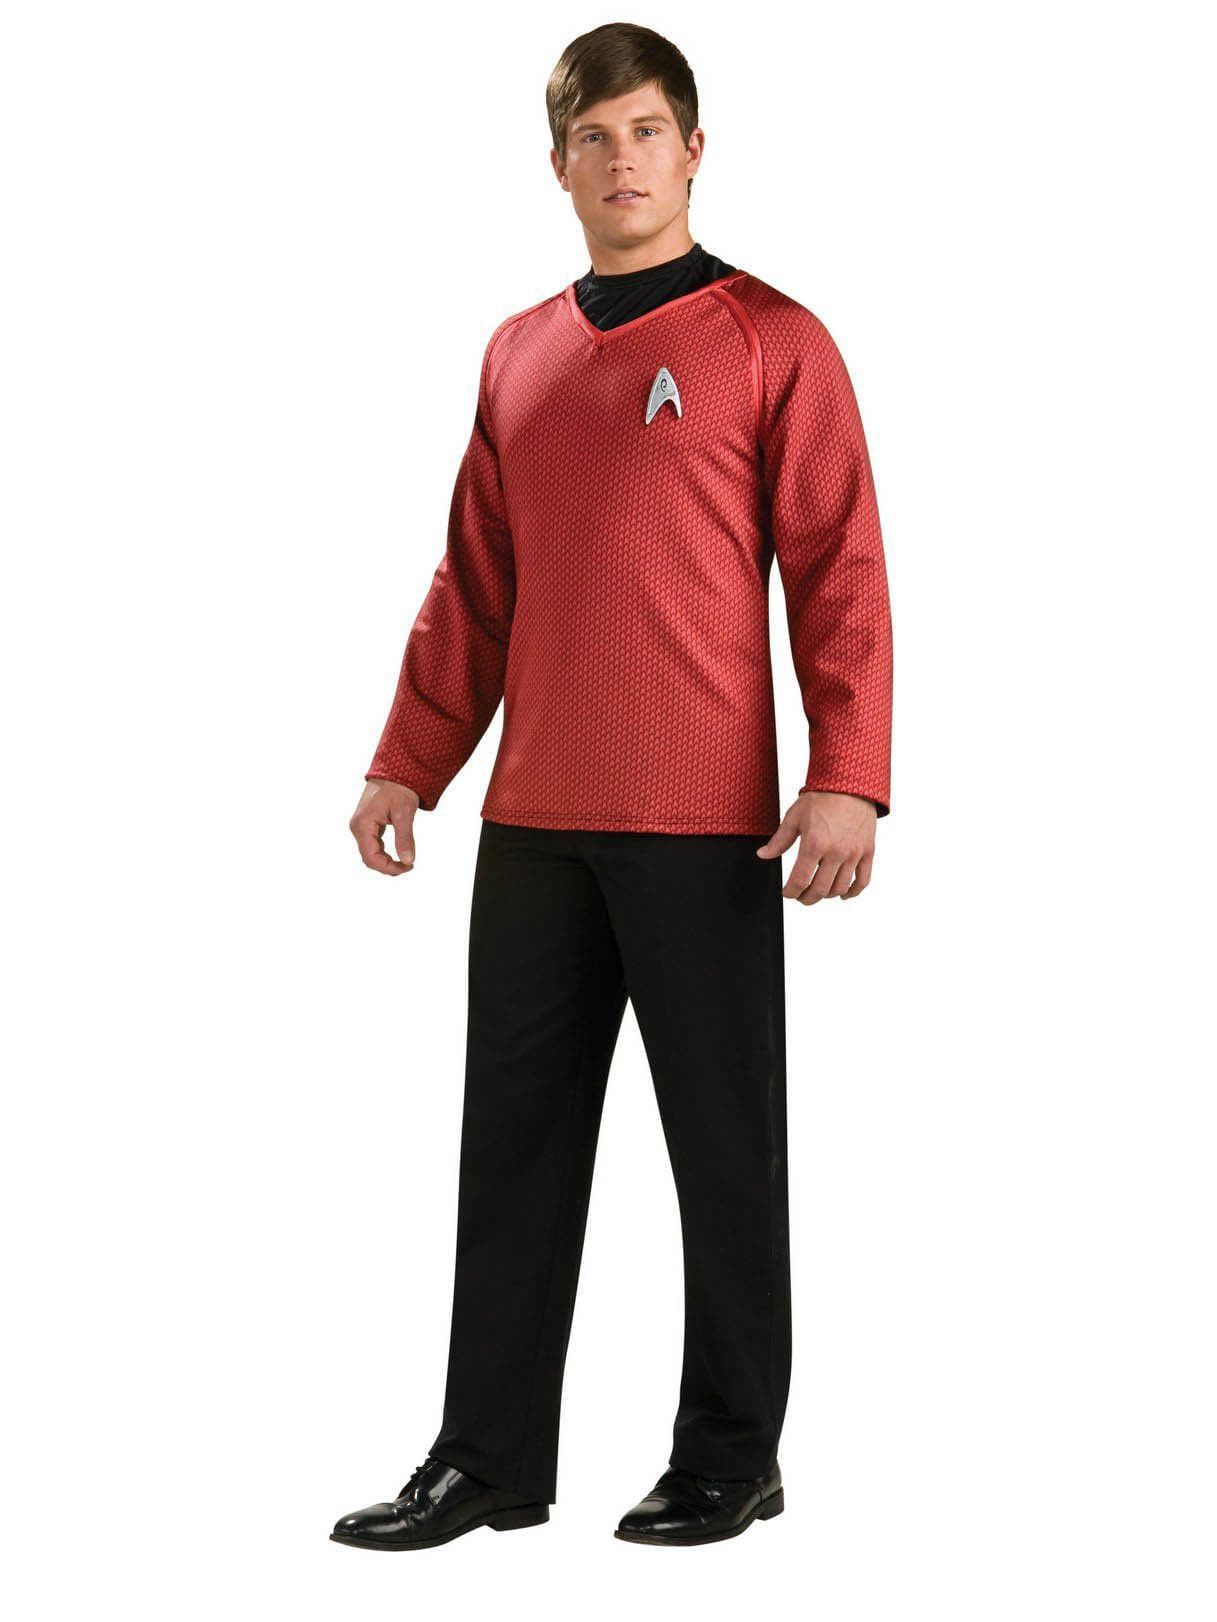 Men's Star Trek II Scotty Costume - Grand Heritage - costumes.com